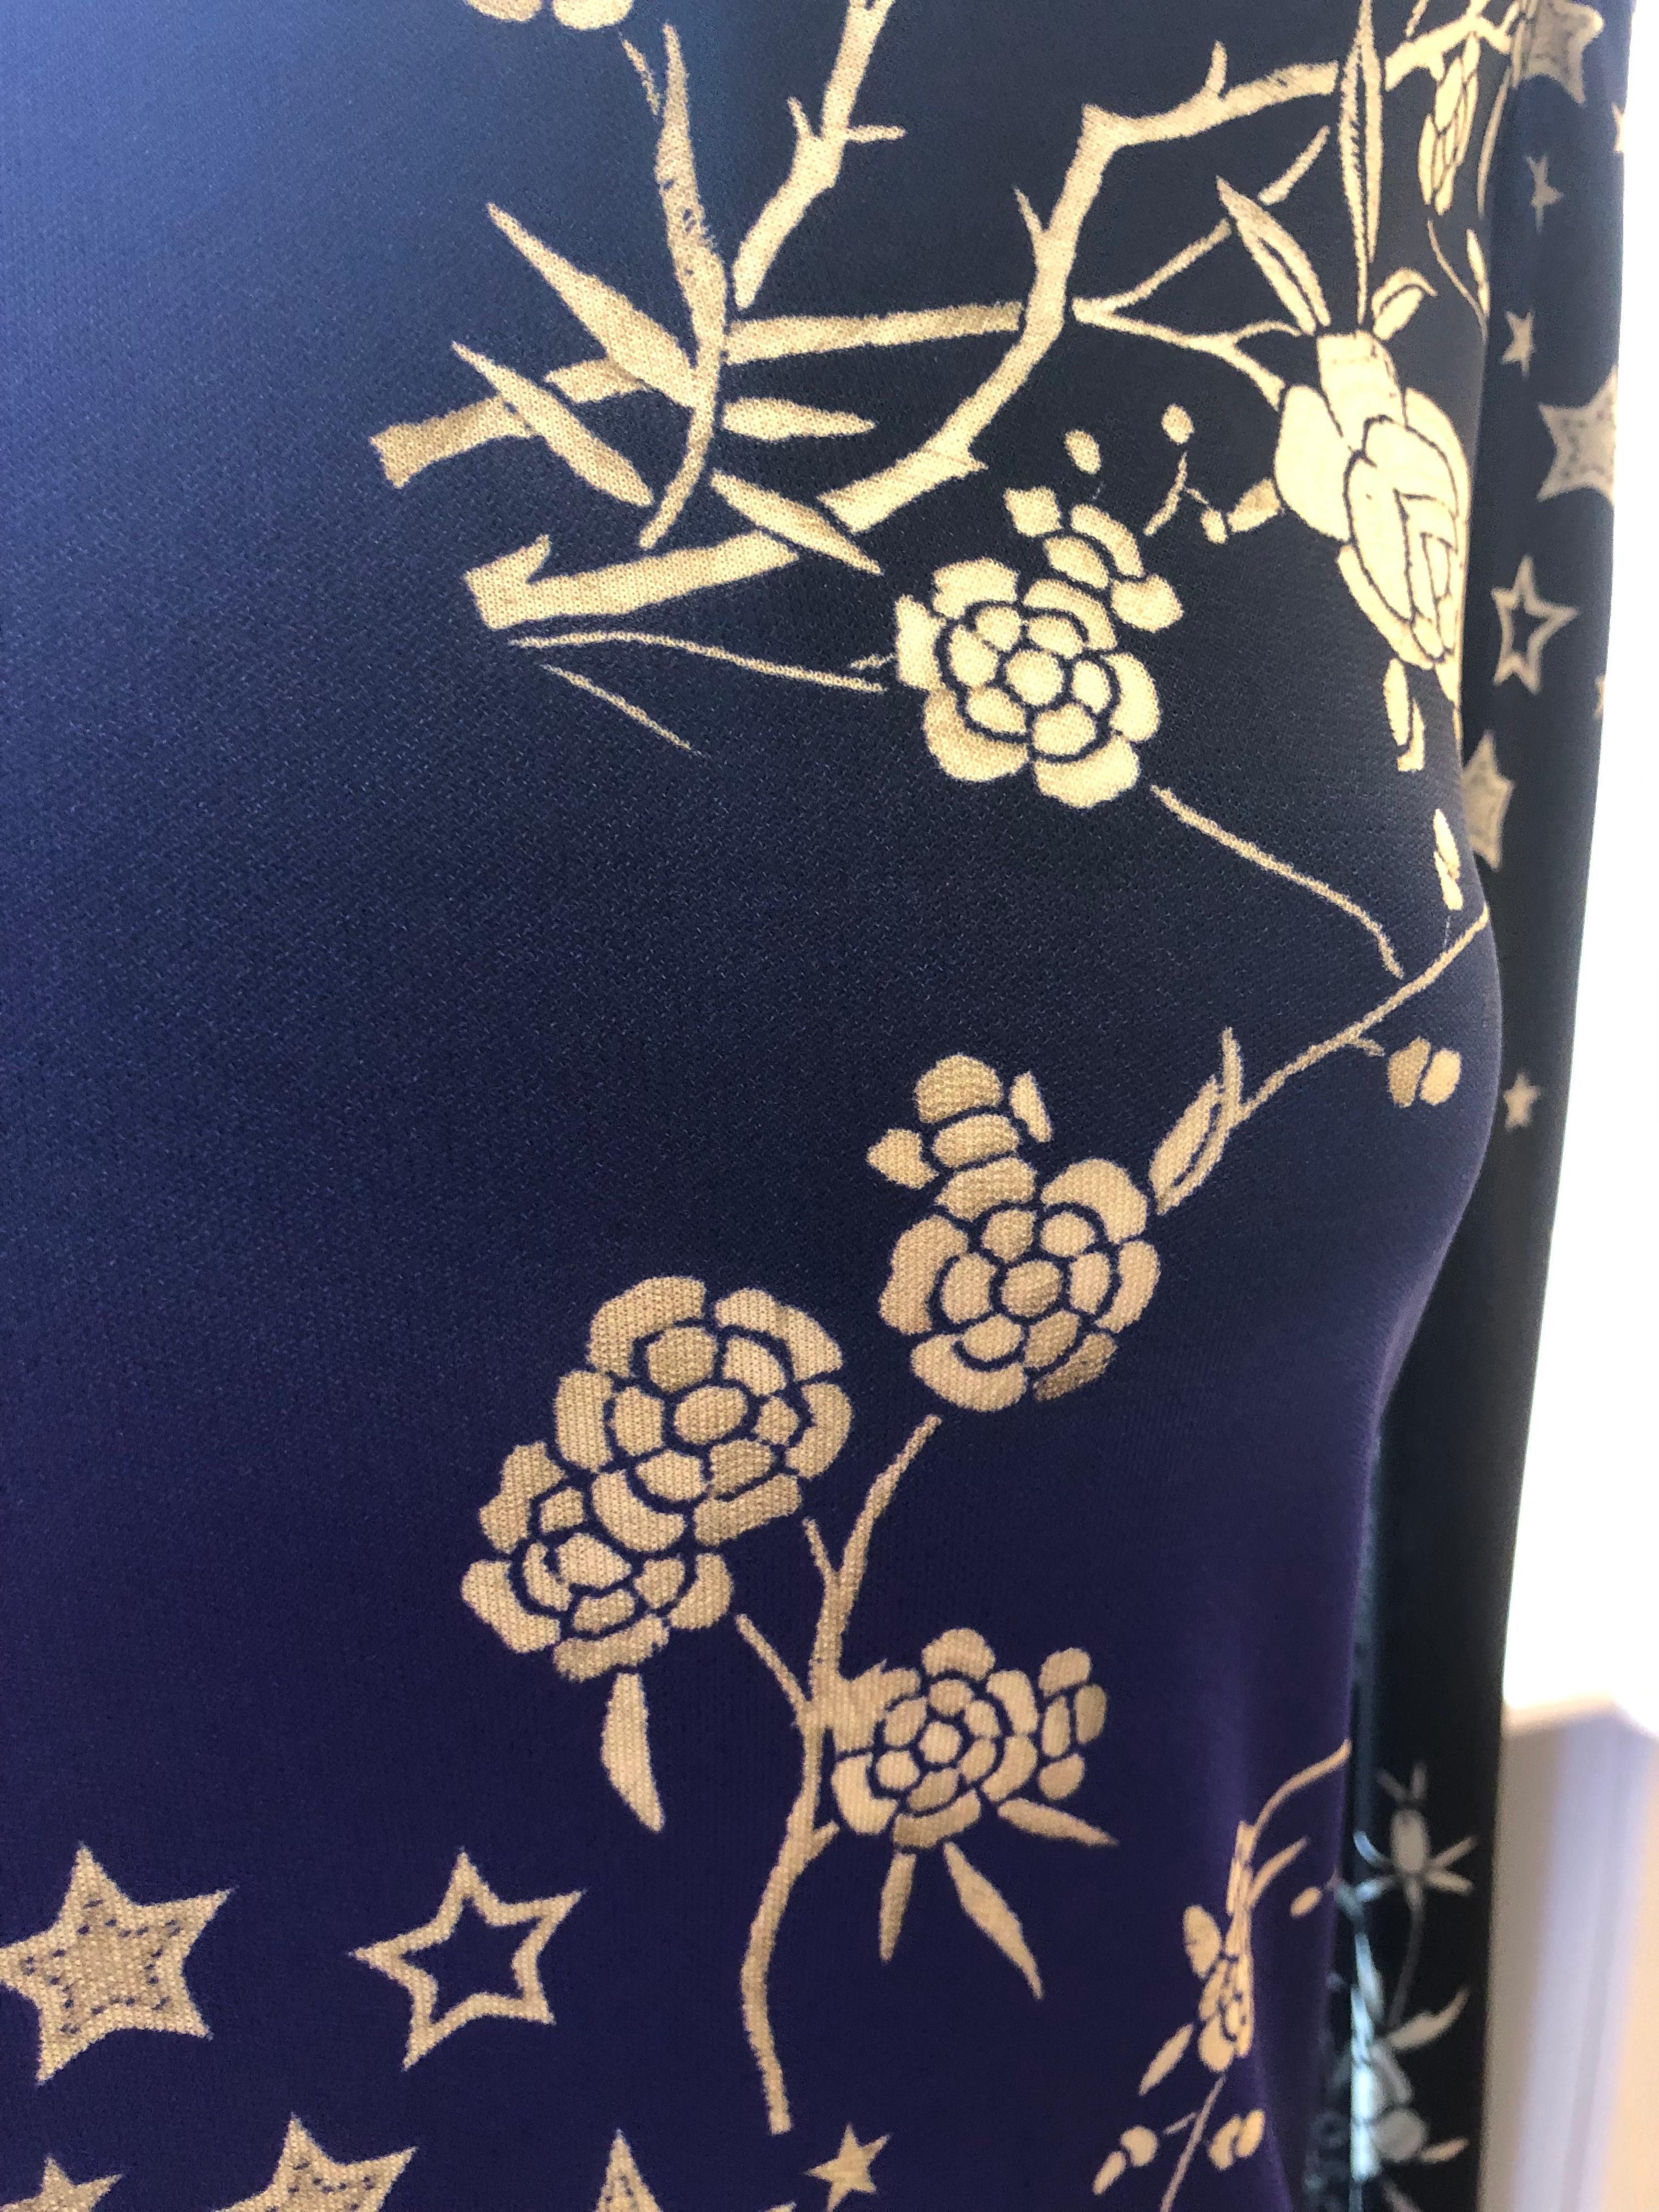 Black 2016 Roberto Cavalli Floral and Star Printed Jersey Dress (42 Itl)